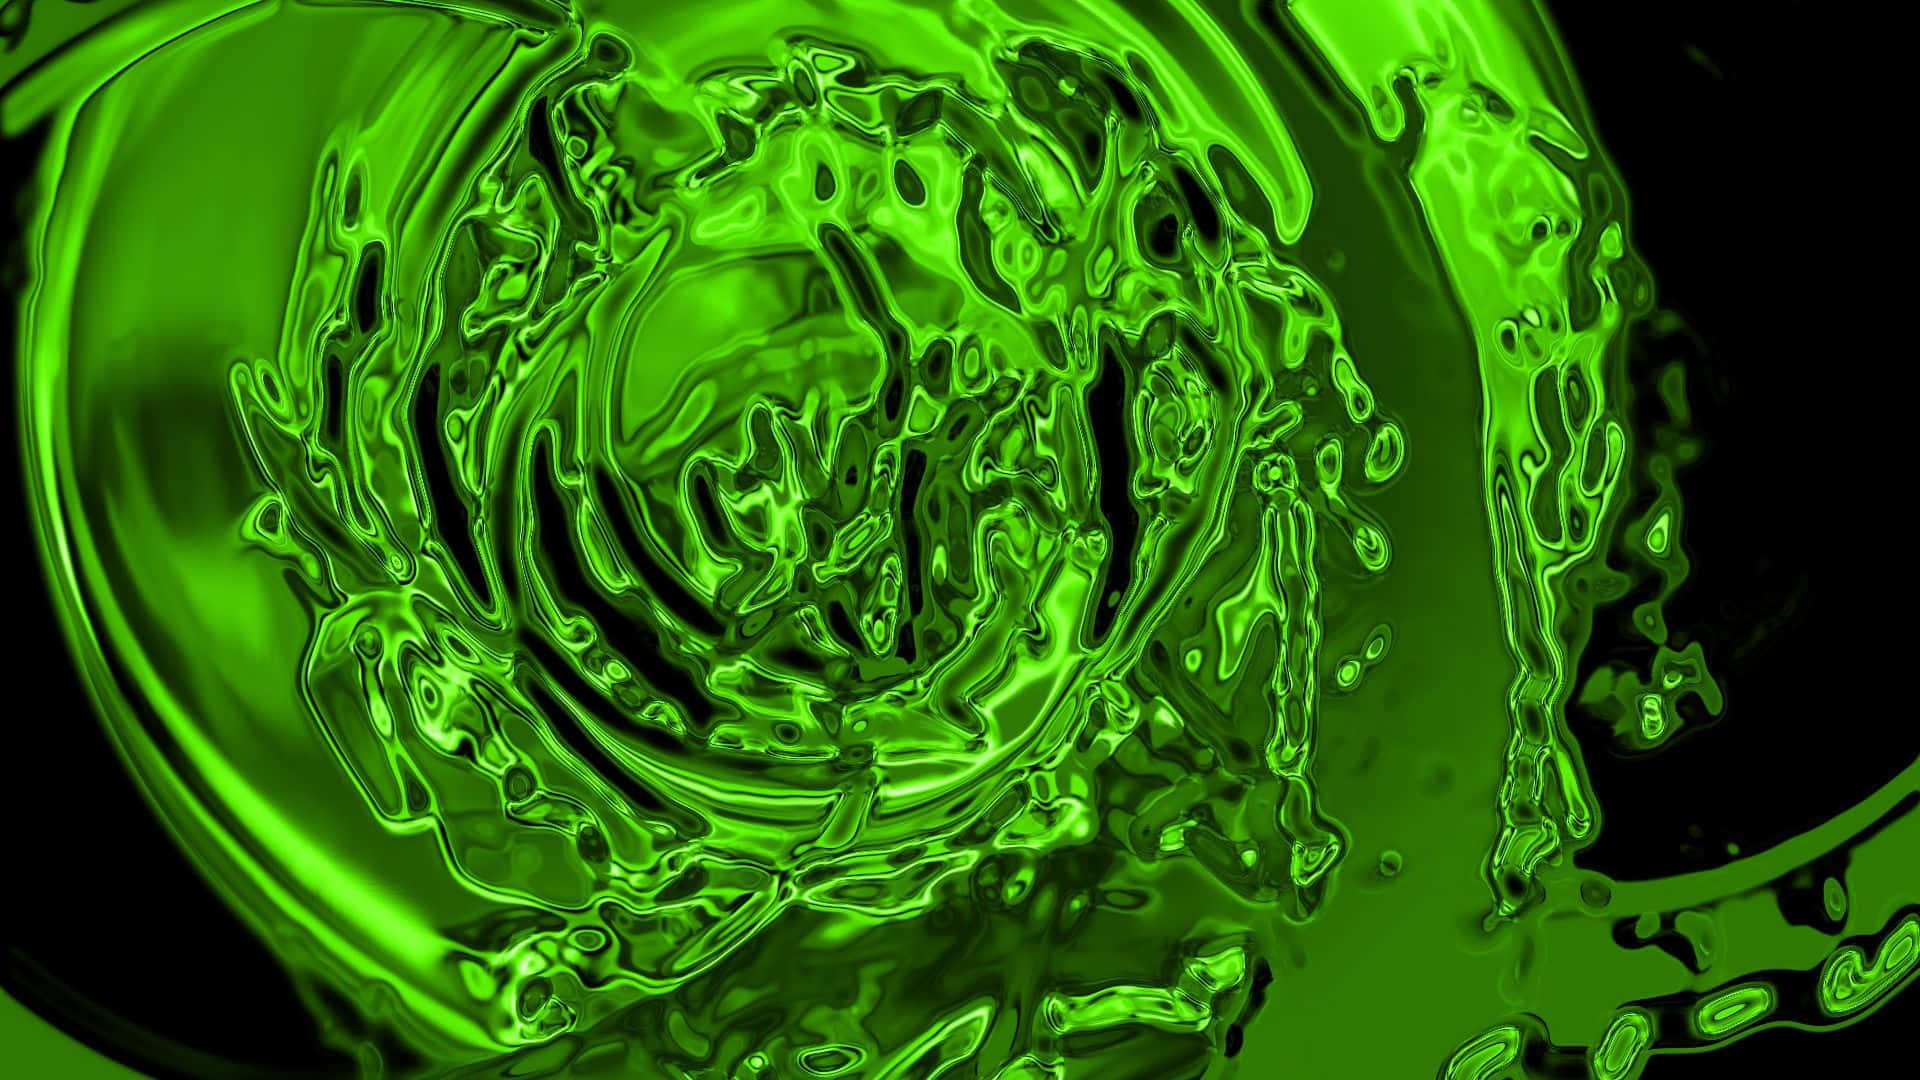 Aesthetic Green Liquid Texture Background